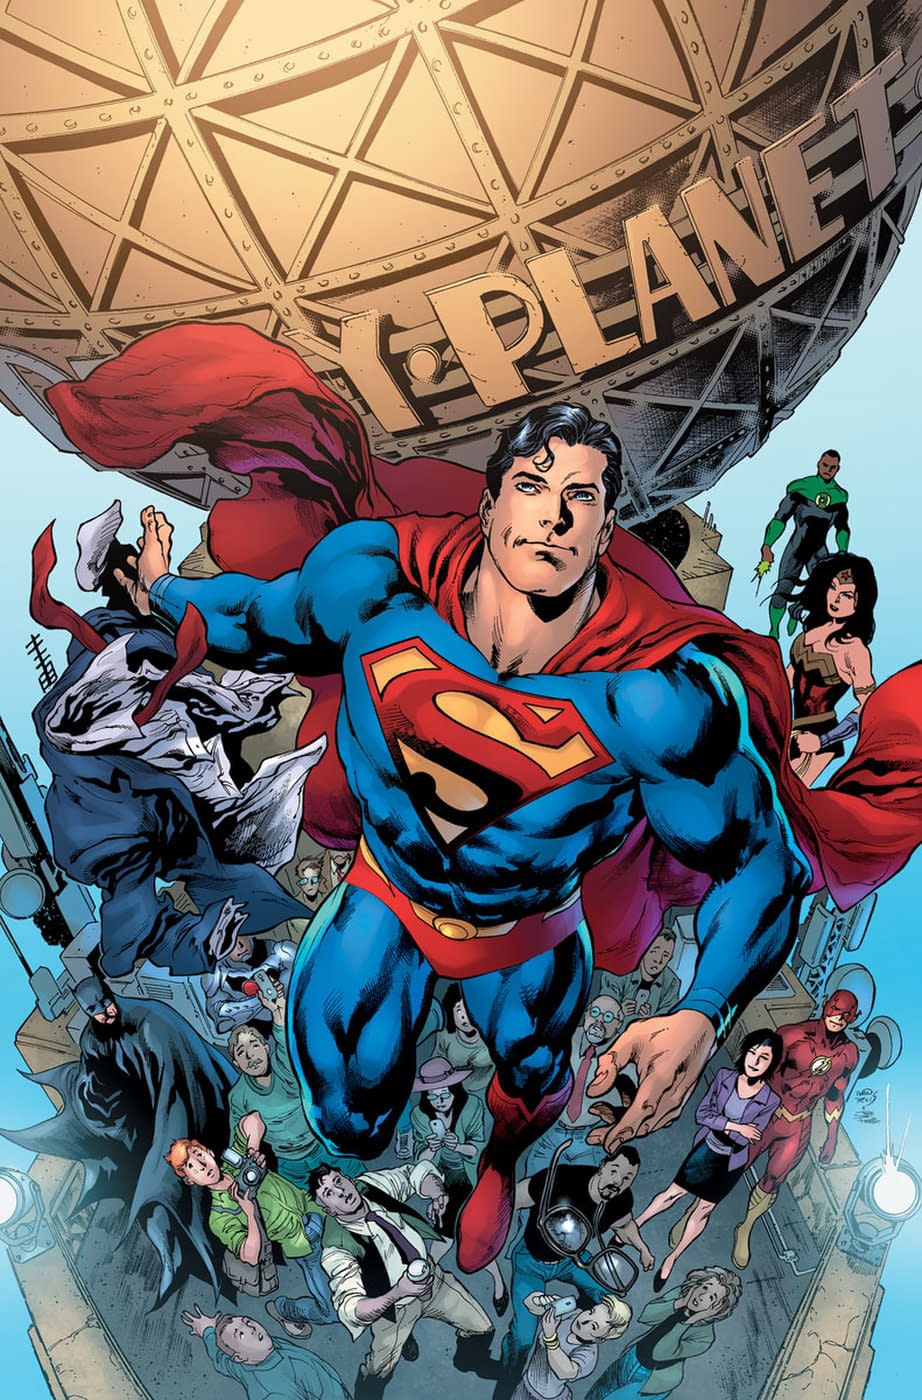 Wonder Woman #750 Leads DC Comics January 2020 Solicitations